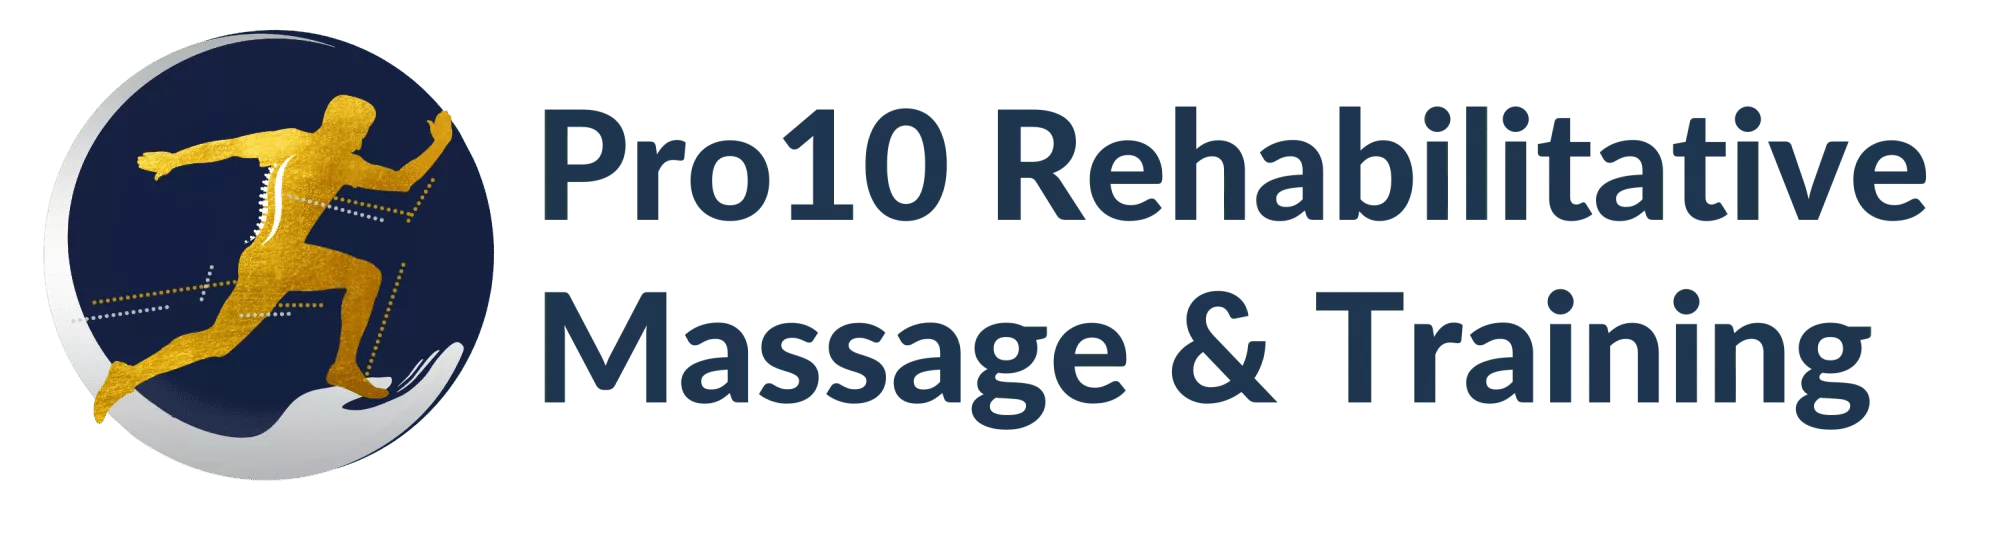 Pro10 therapeutic massage & training logo.